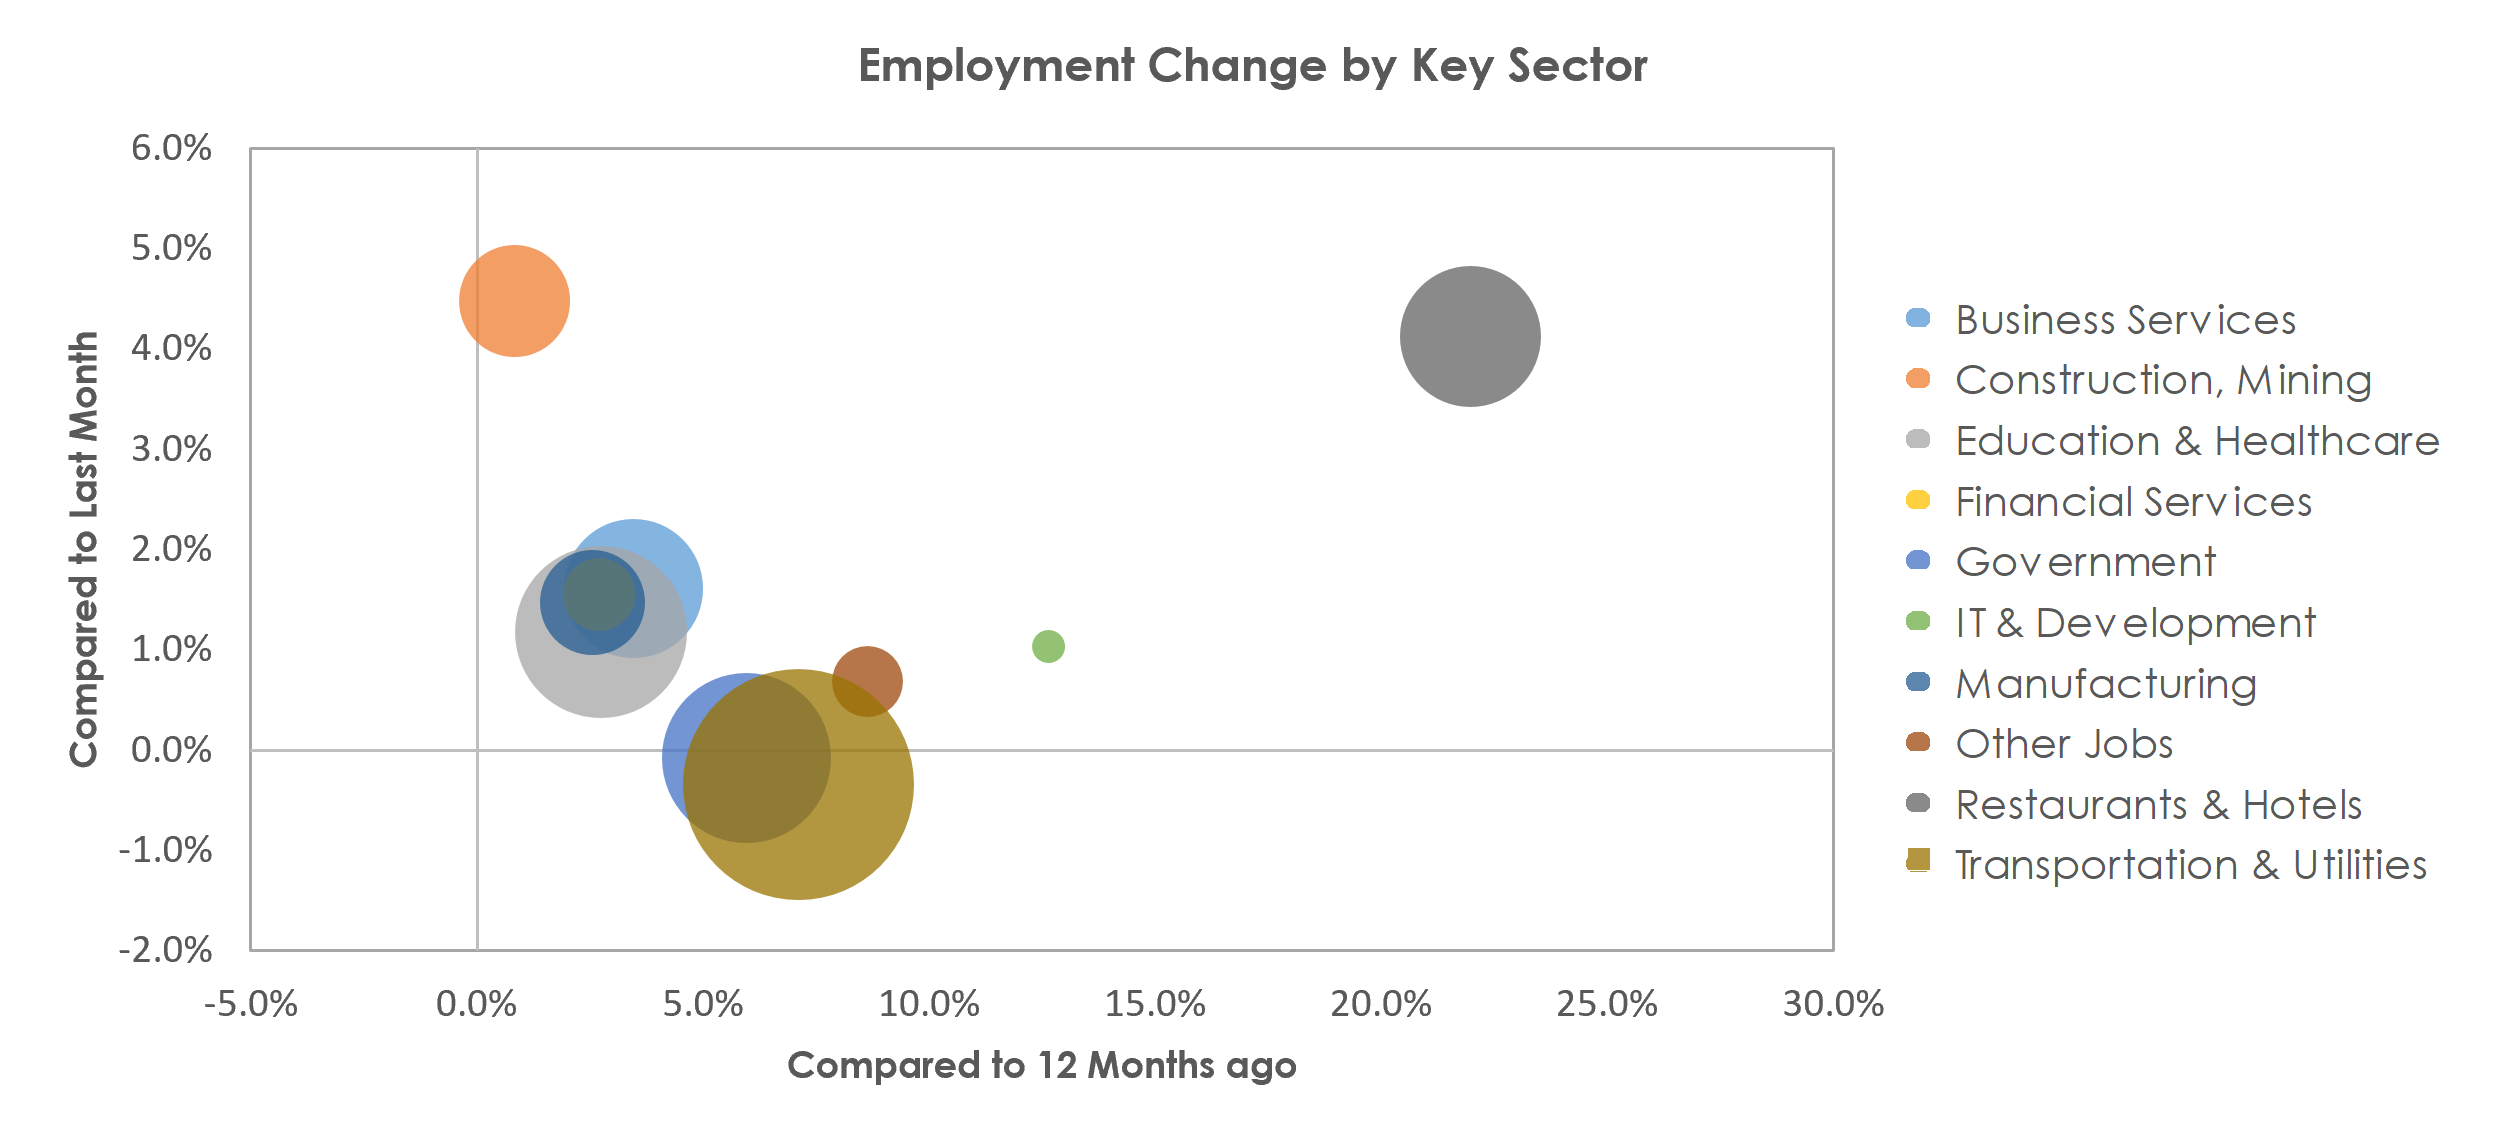 Riverside-San Bernardino-Ontario, CA Unemployment by Industry February 2022